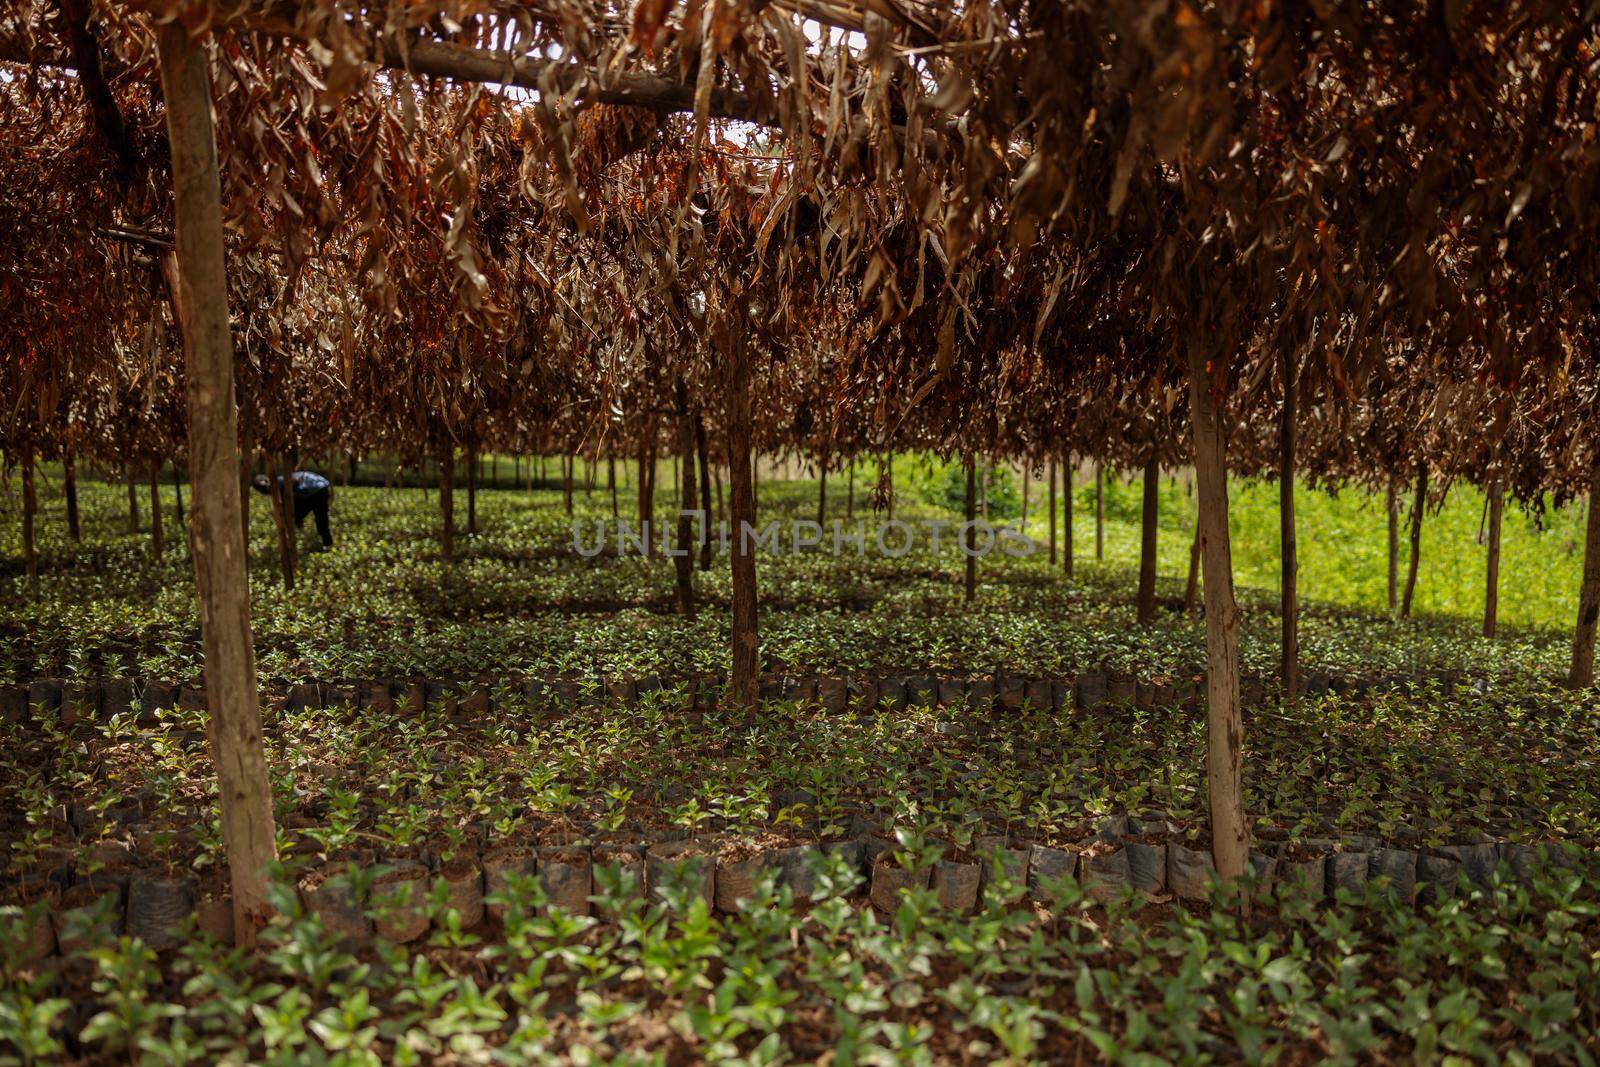 African American man working among the trees on a coffee plantation, Rwanda region